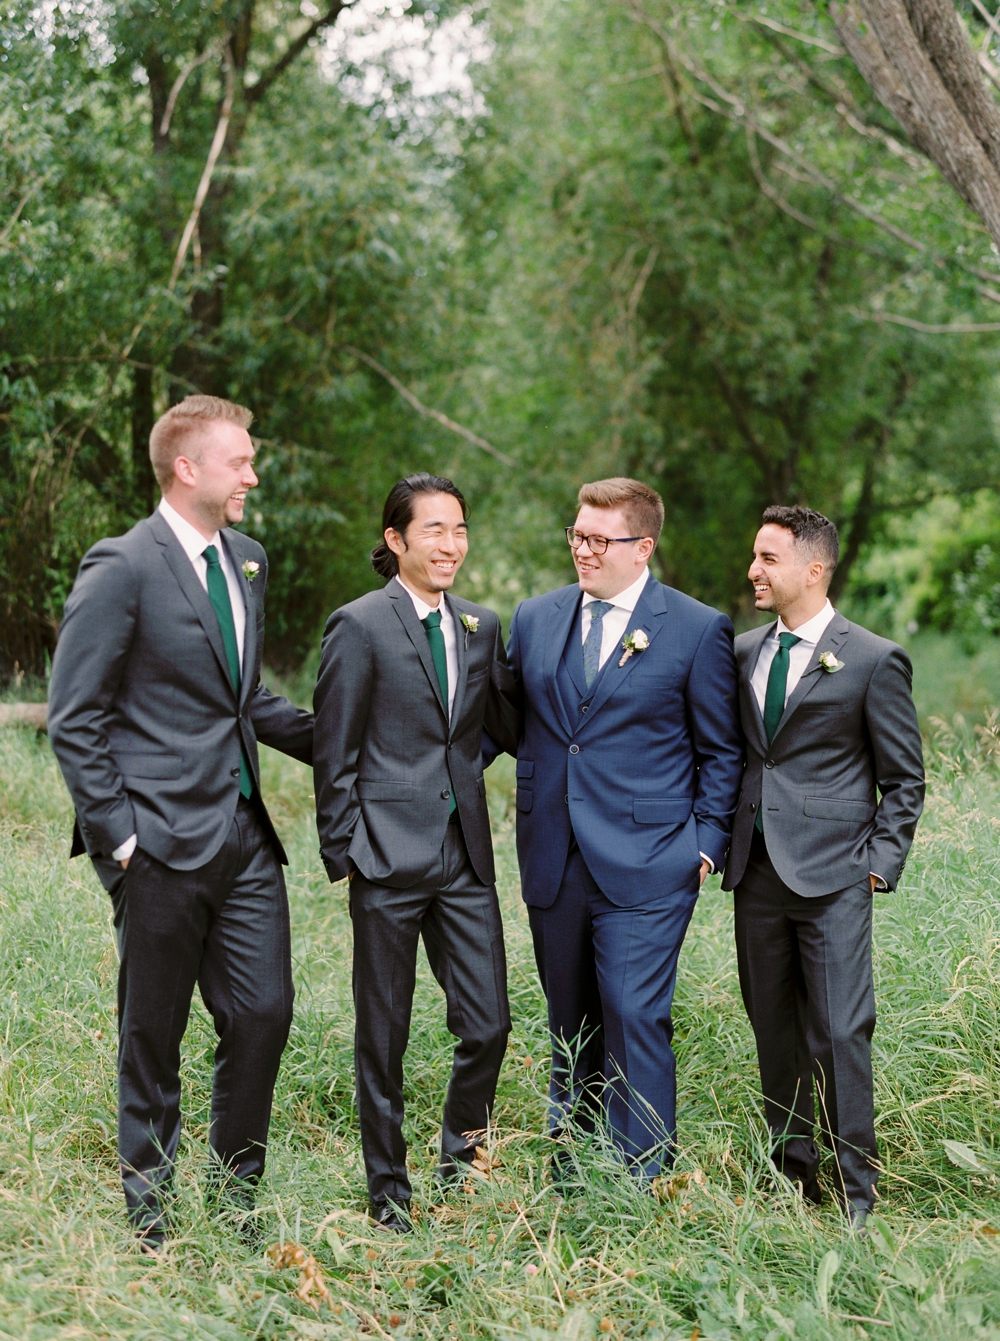 Calgary wedding photographers | The lake house wedding | Wedding Party Bridesmaids Emerald Green Dresses | Justine Milton Photography